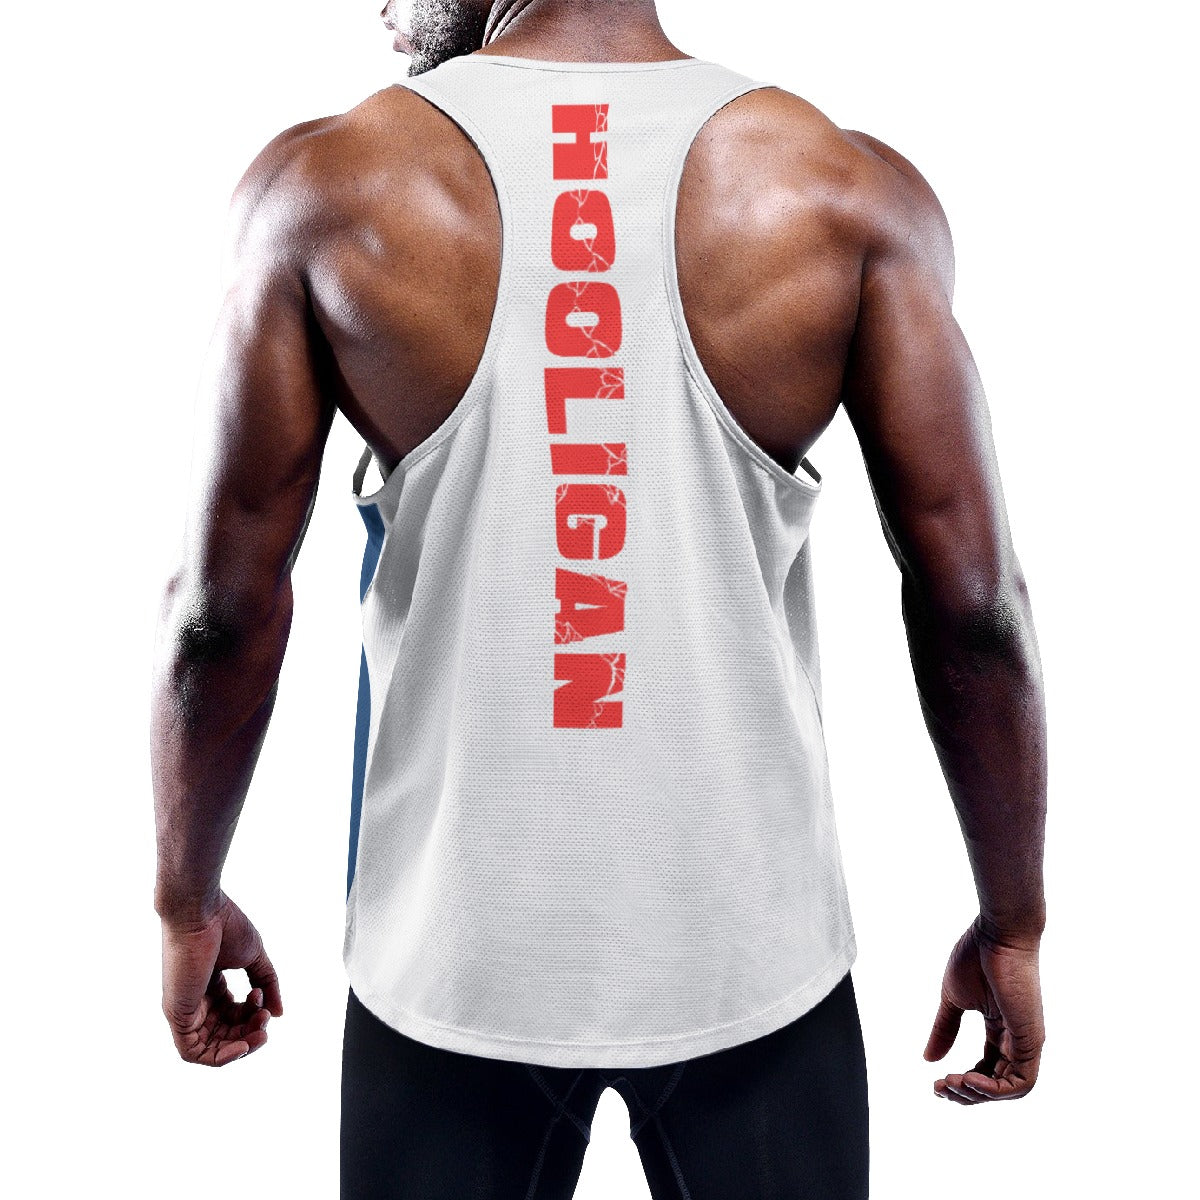 All-Over Print Men's Slim Y-Back Muscle Tank Top